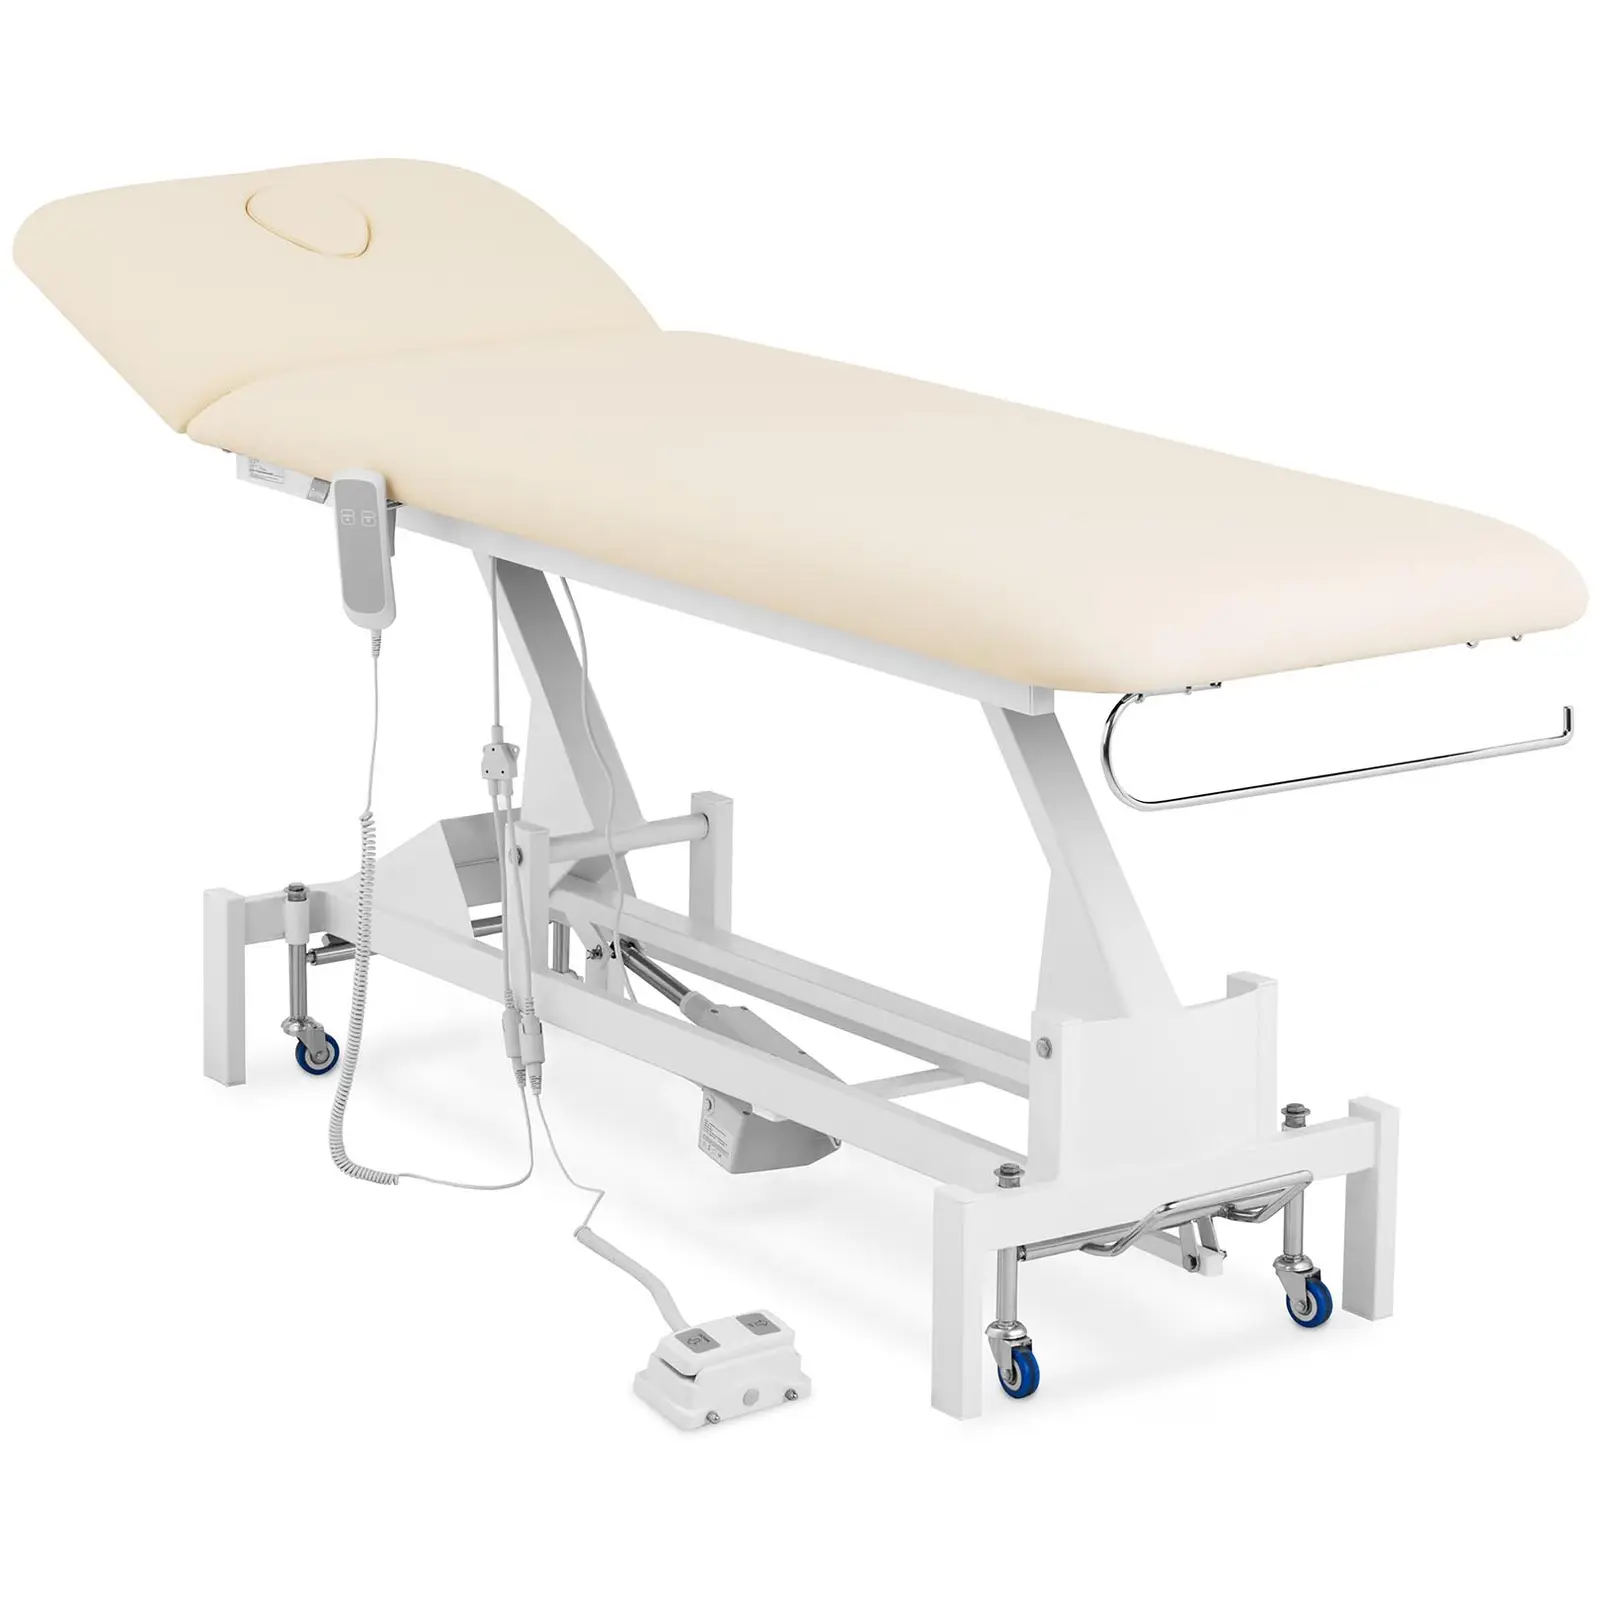 Table de massage - 50 W - 200 kg - Beige